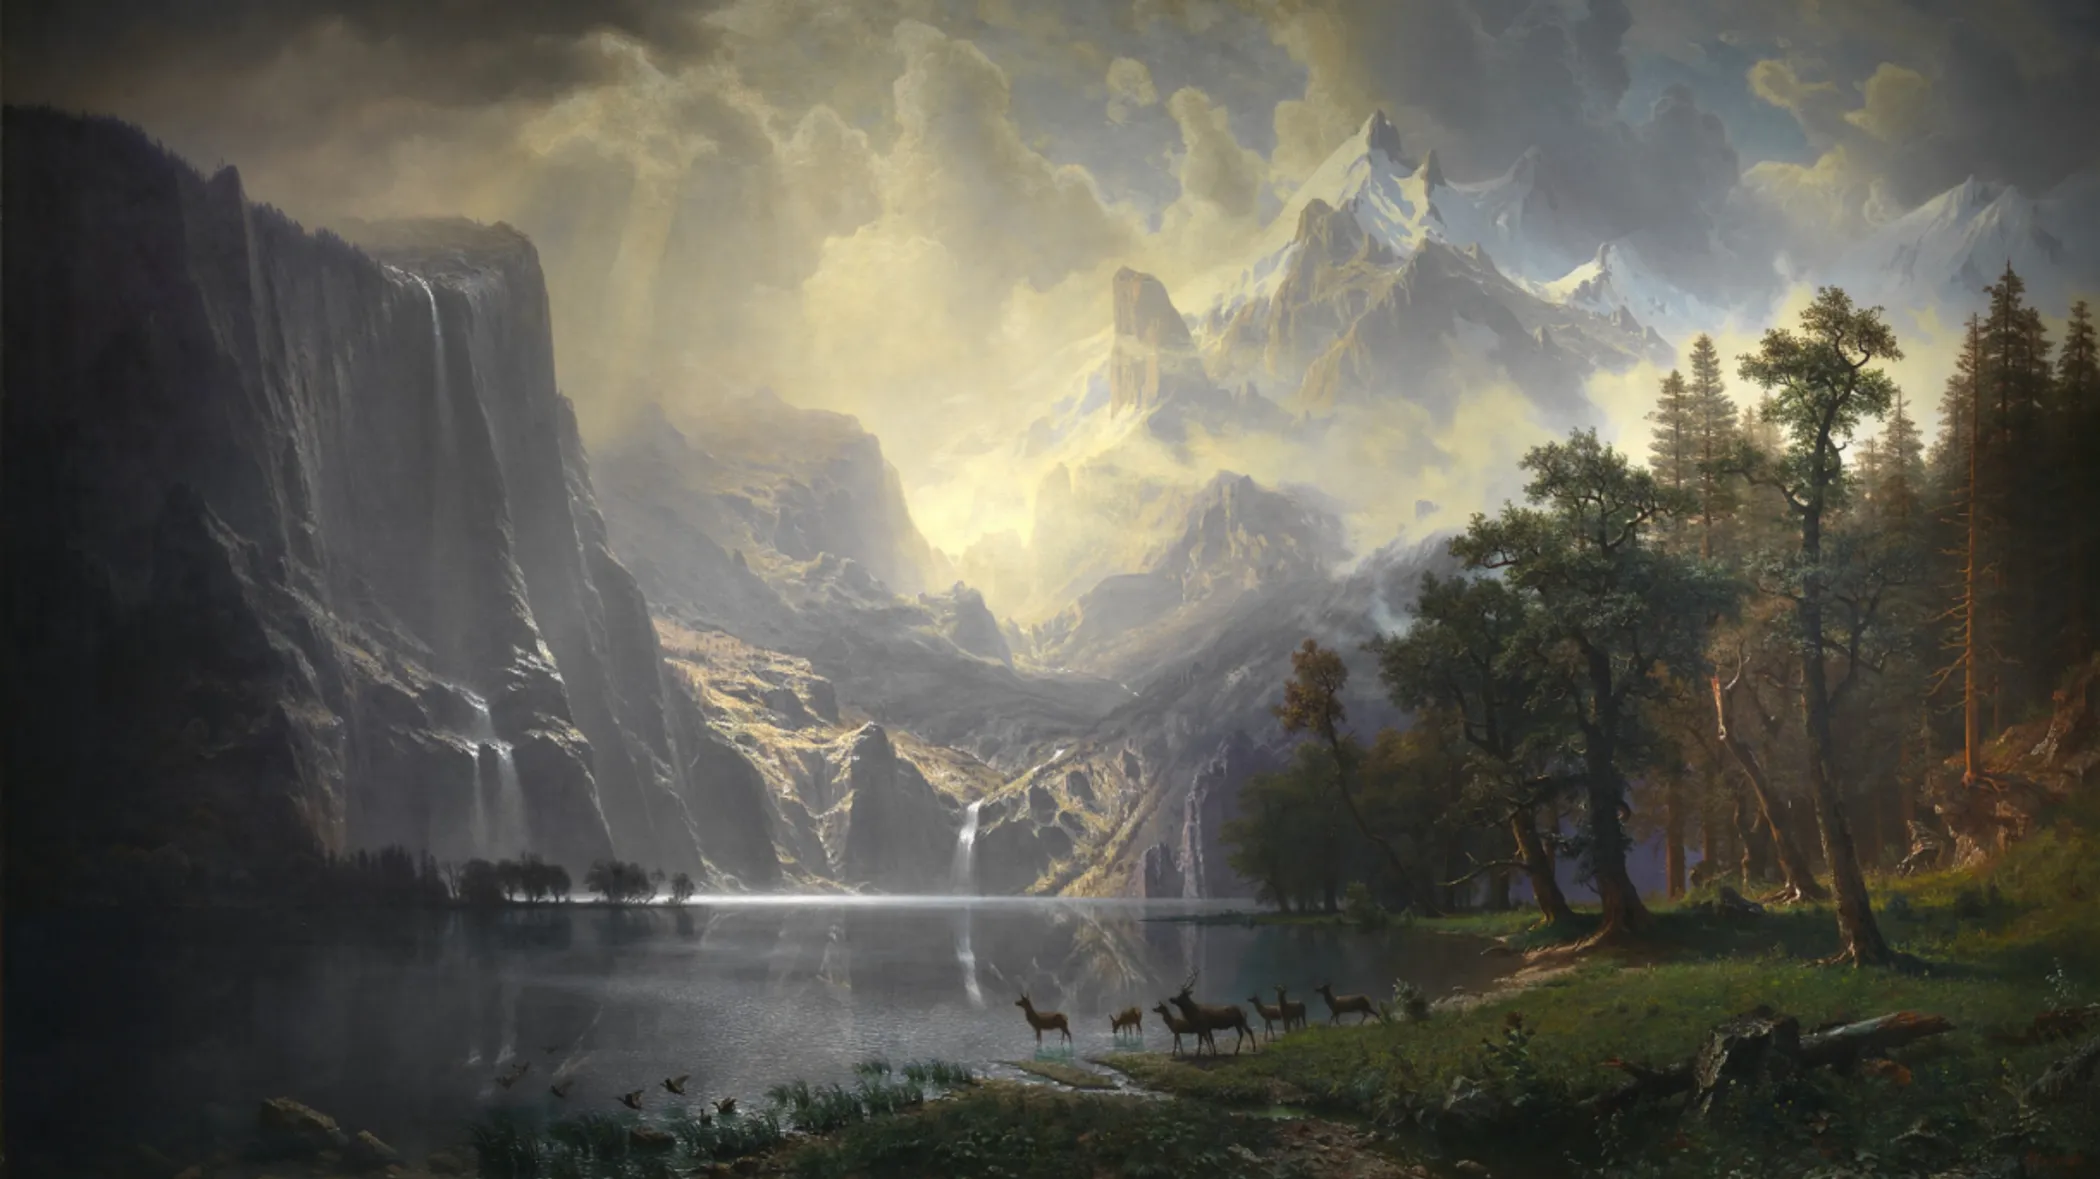 'Among the Sierra Nevada Mountains' by Albert Bierstadt